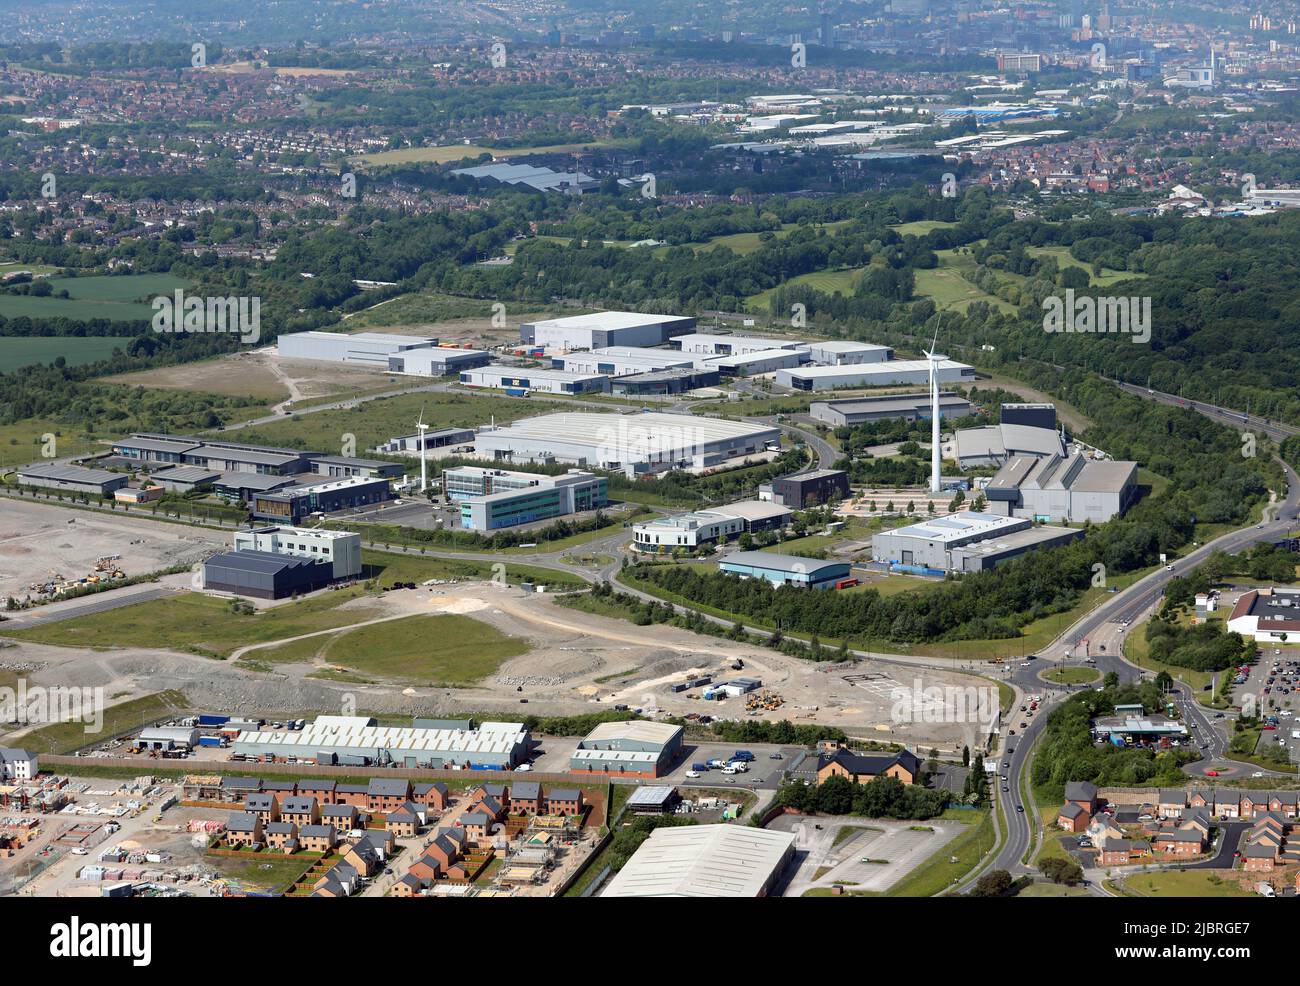 Vista aérea del parque Advanced Manufacturing Park (AMP), parque de negocios en Catcliffe, cerca de Rotherham & Sheffield Foto de stock